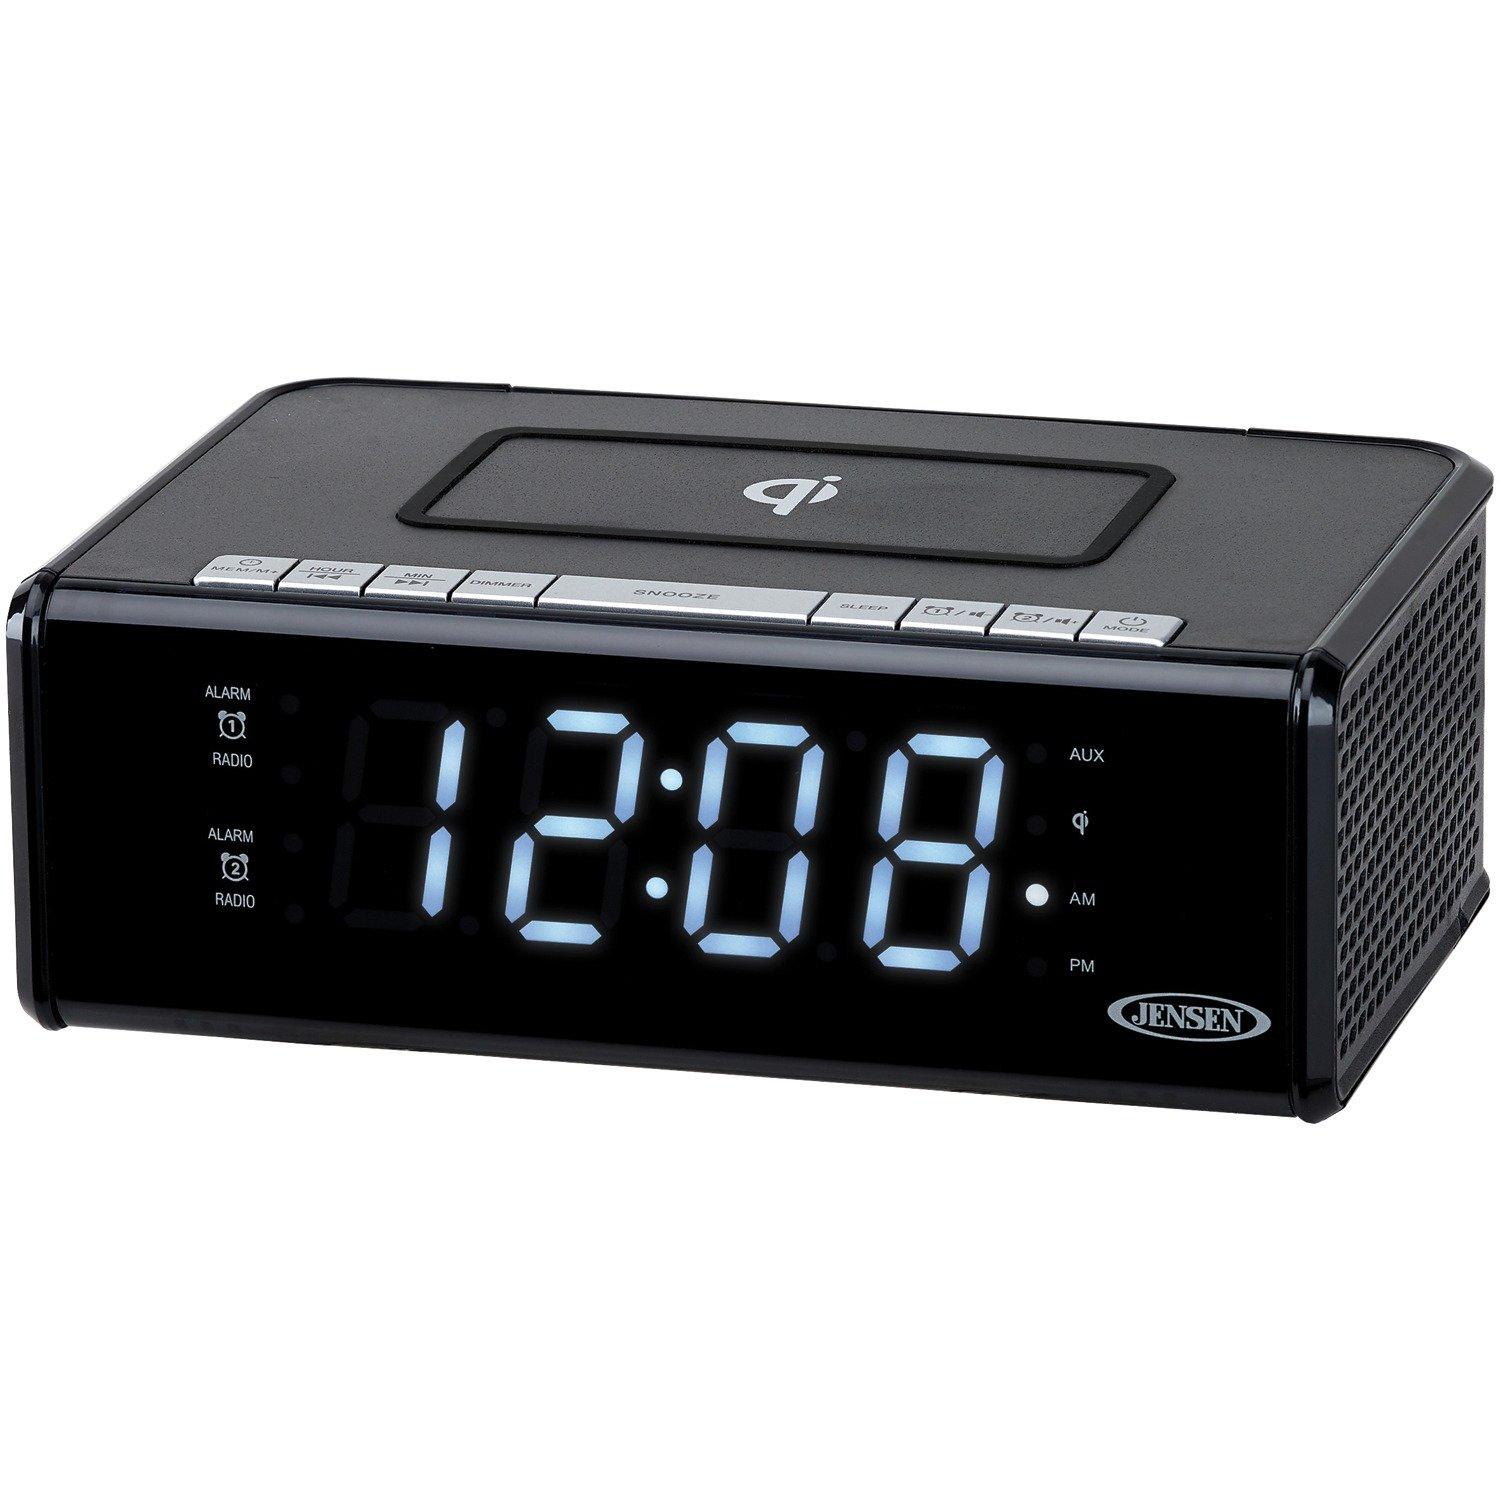 Charging Qicr-50 Dual Alarm Clock Radio With Wireless Qi Jensen qicr50 r r 